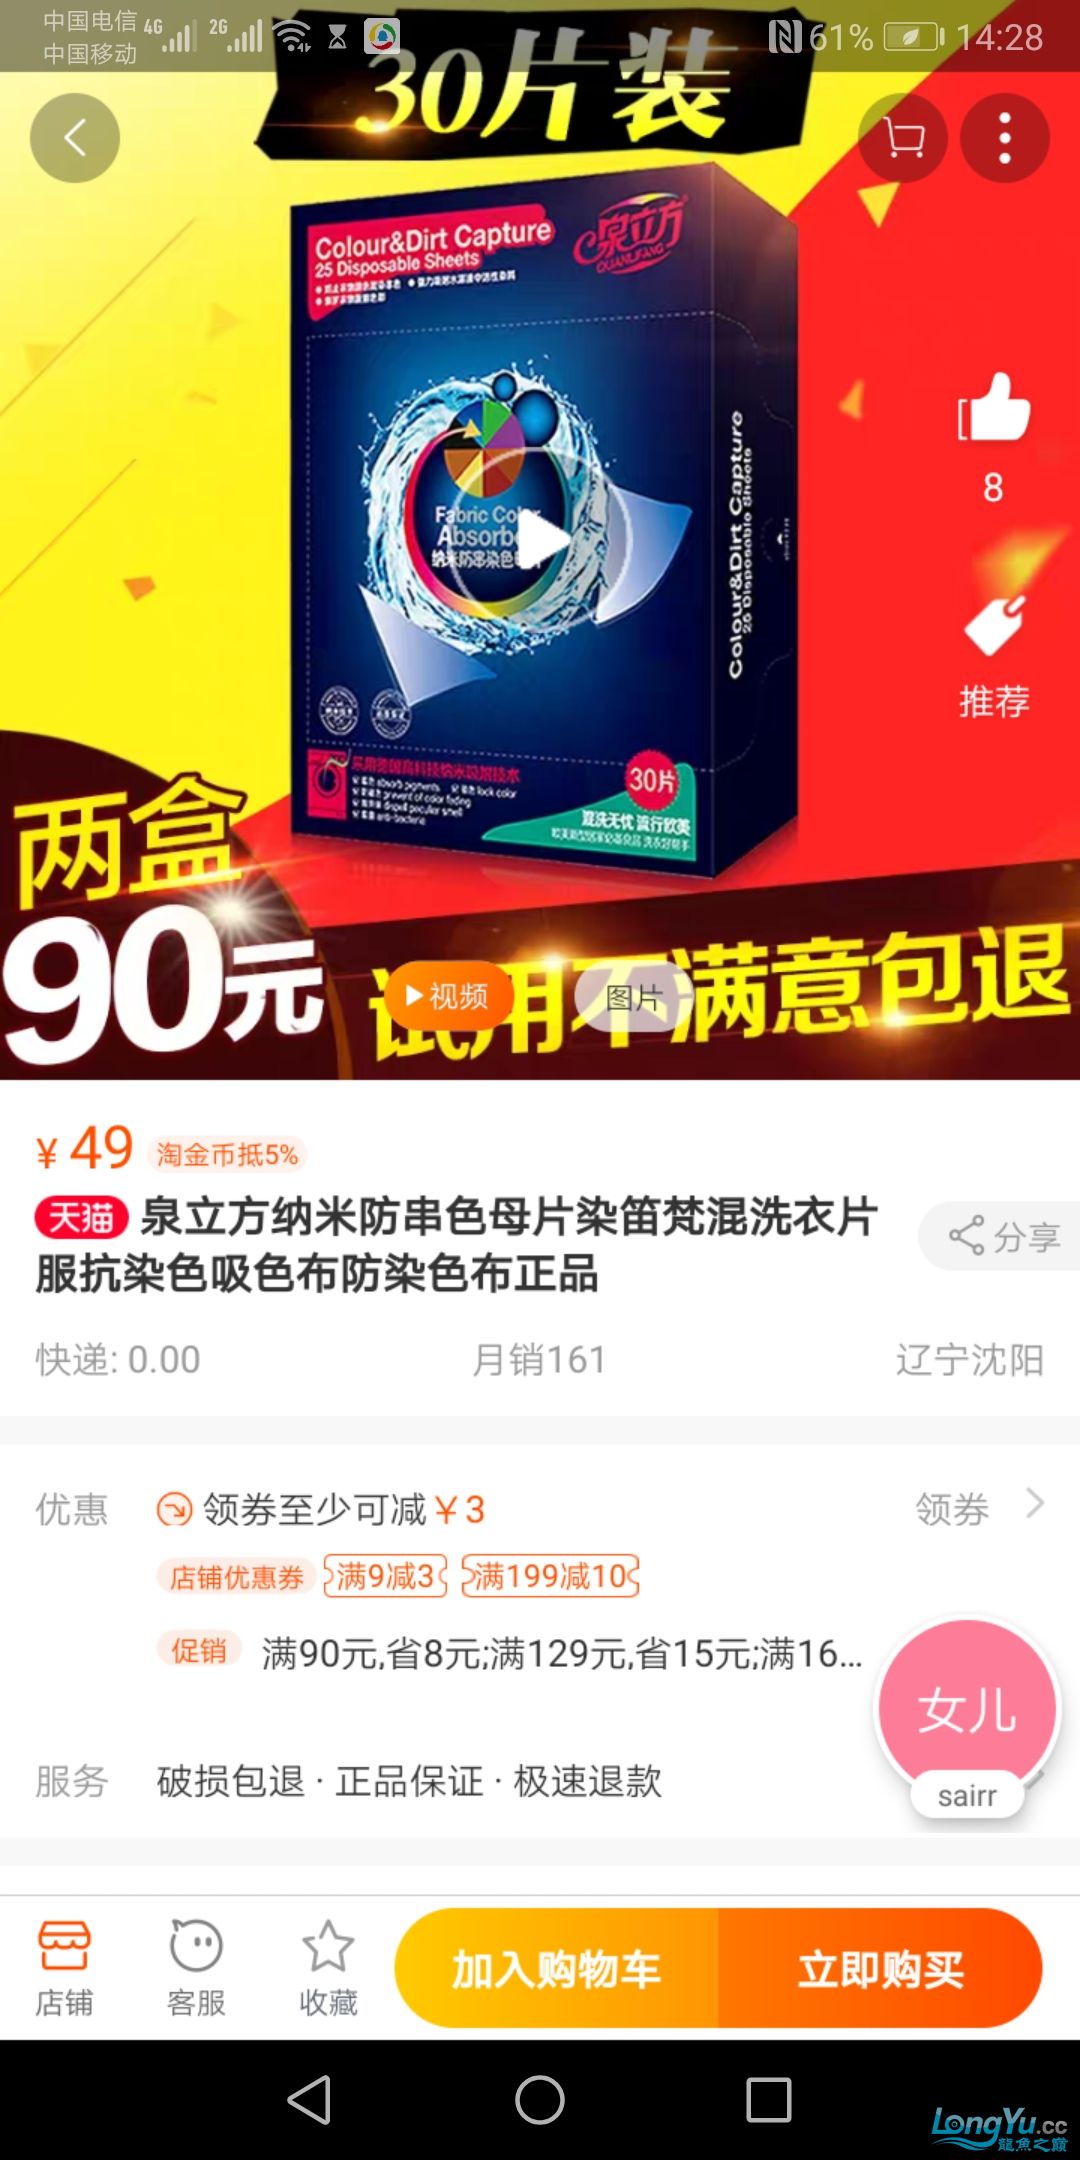 Screenshot_20190207_142828_com.taobao.taobao.jpg